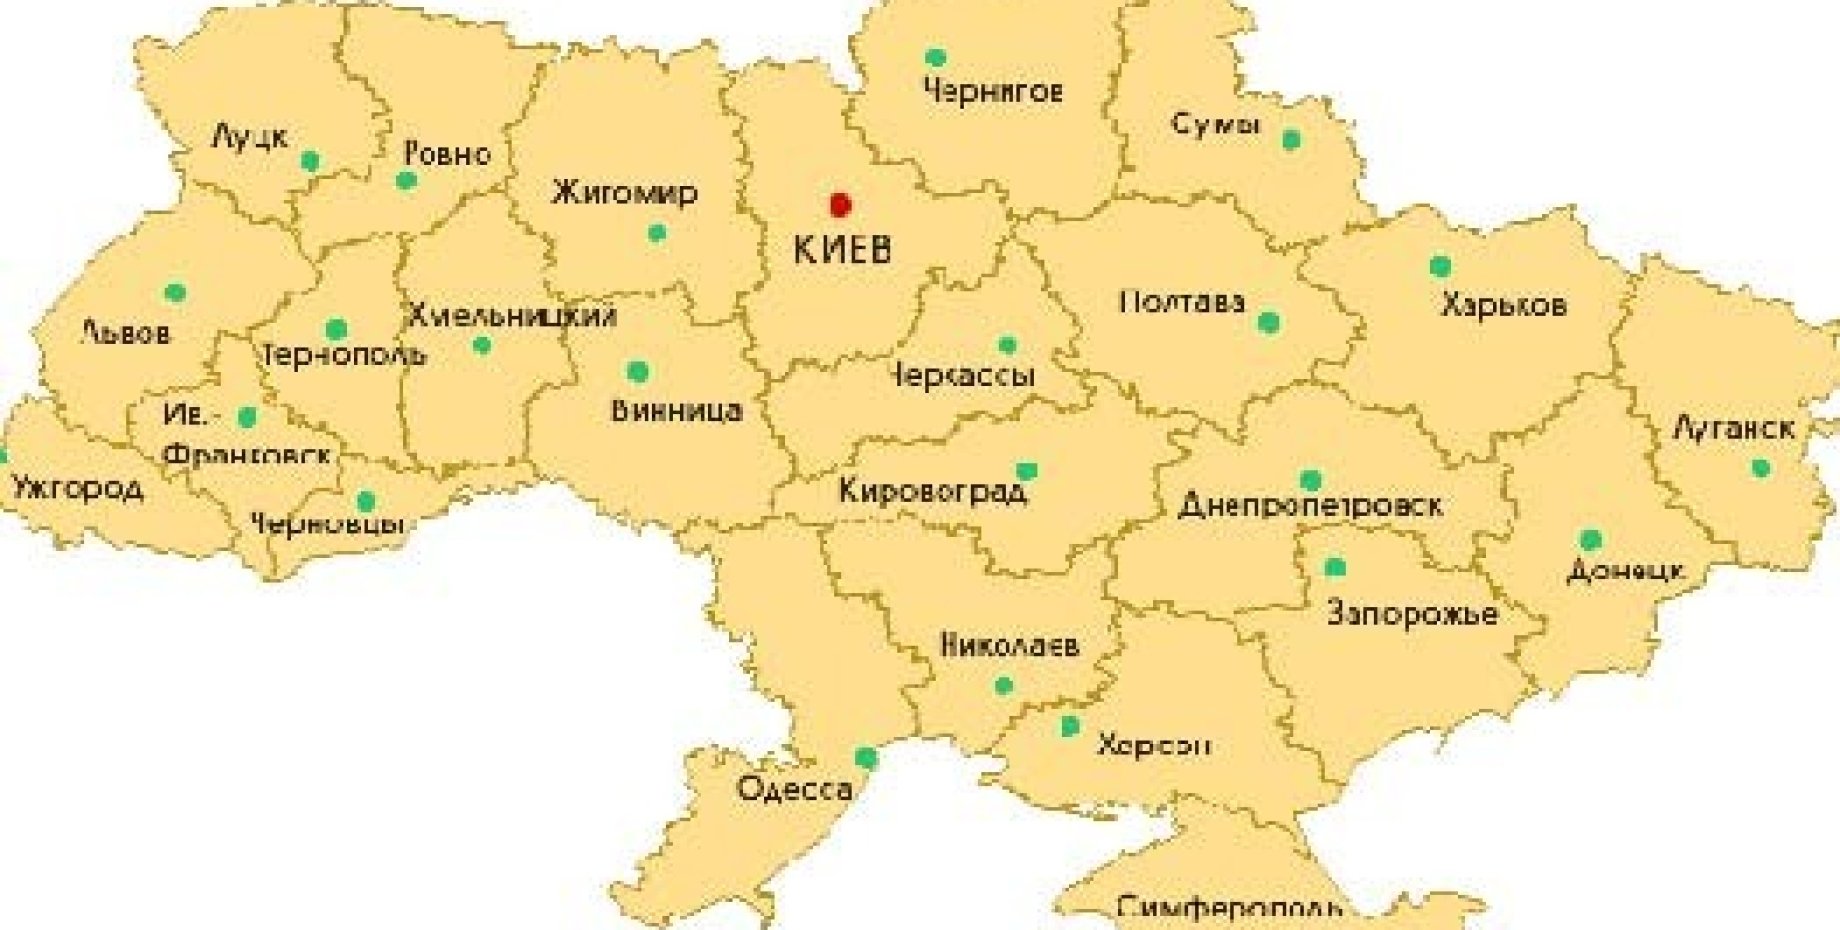 Такмаки украина на карте украины. Карта Украины по областям и городам. Карта Украины с областями. Карта Украины с городами. Карта Украины до 2014 года с областями.